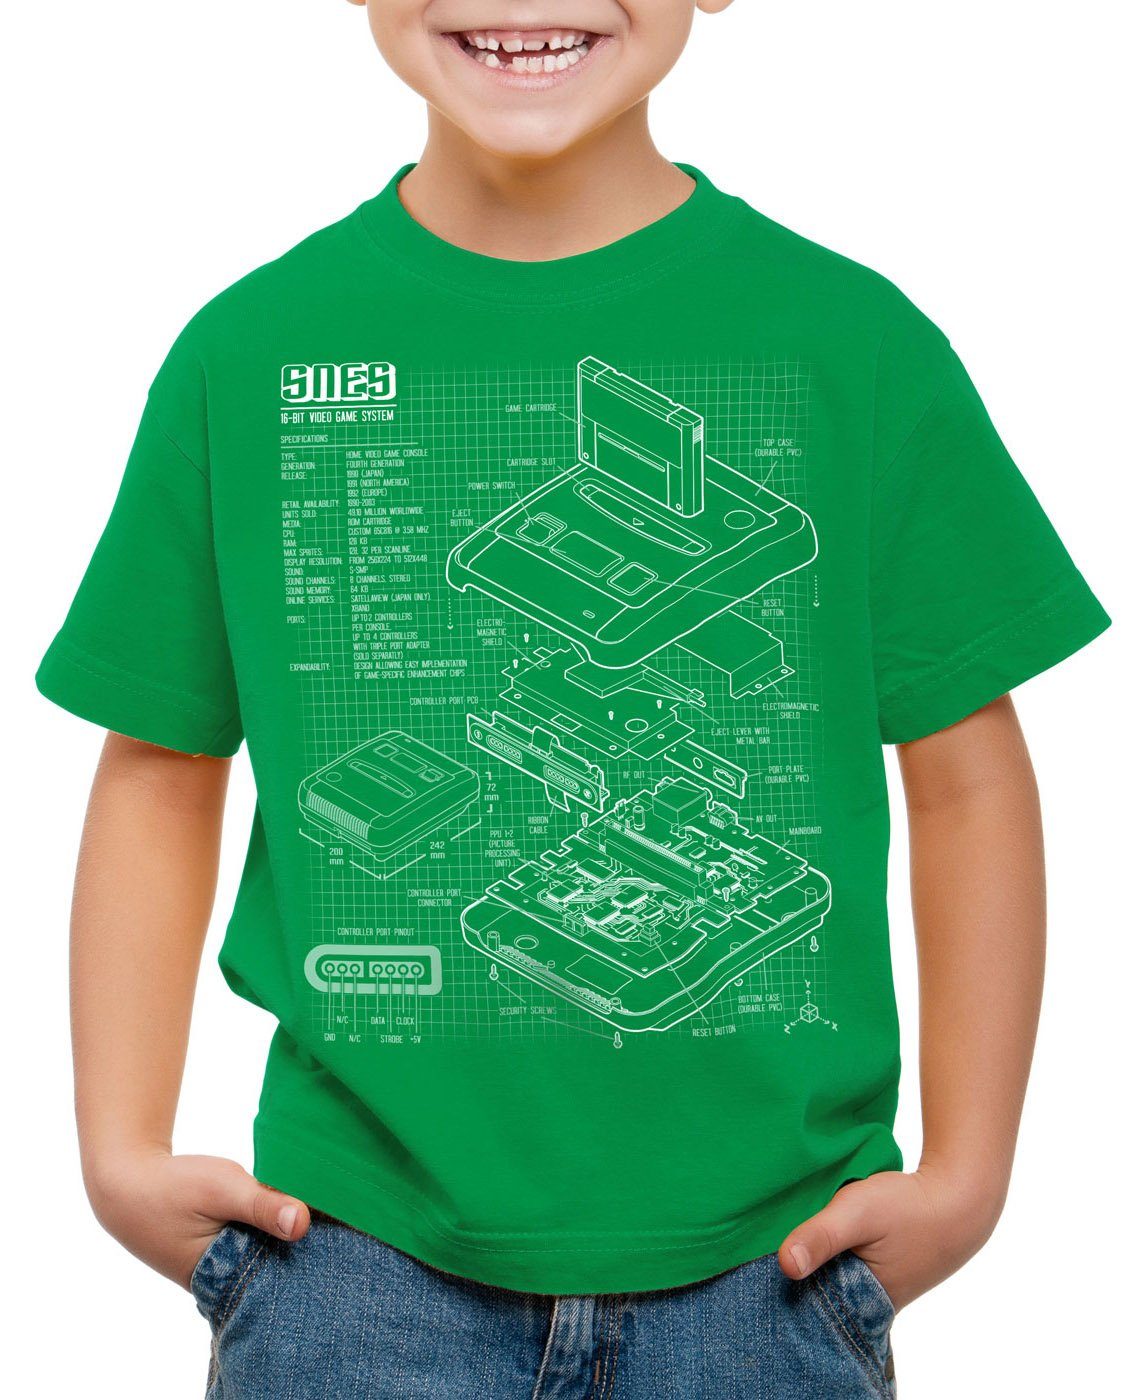 style3 Print-Shirt Kinder T-Shirt SNES Blaupause 16-Bit Videospiel grün